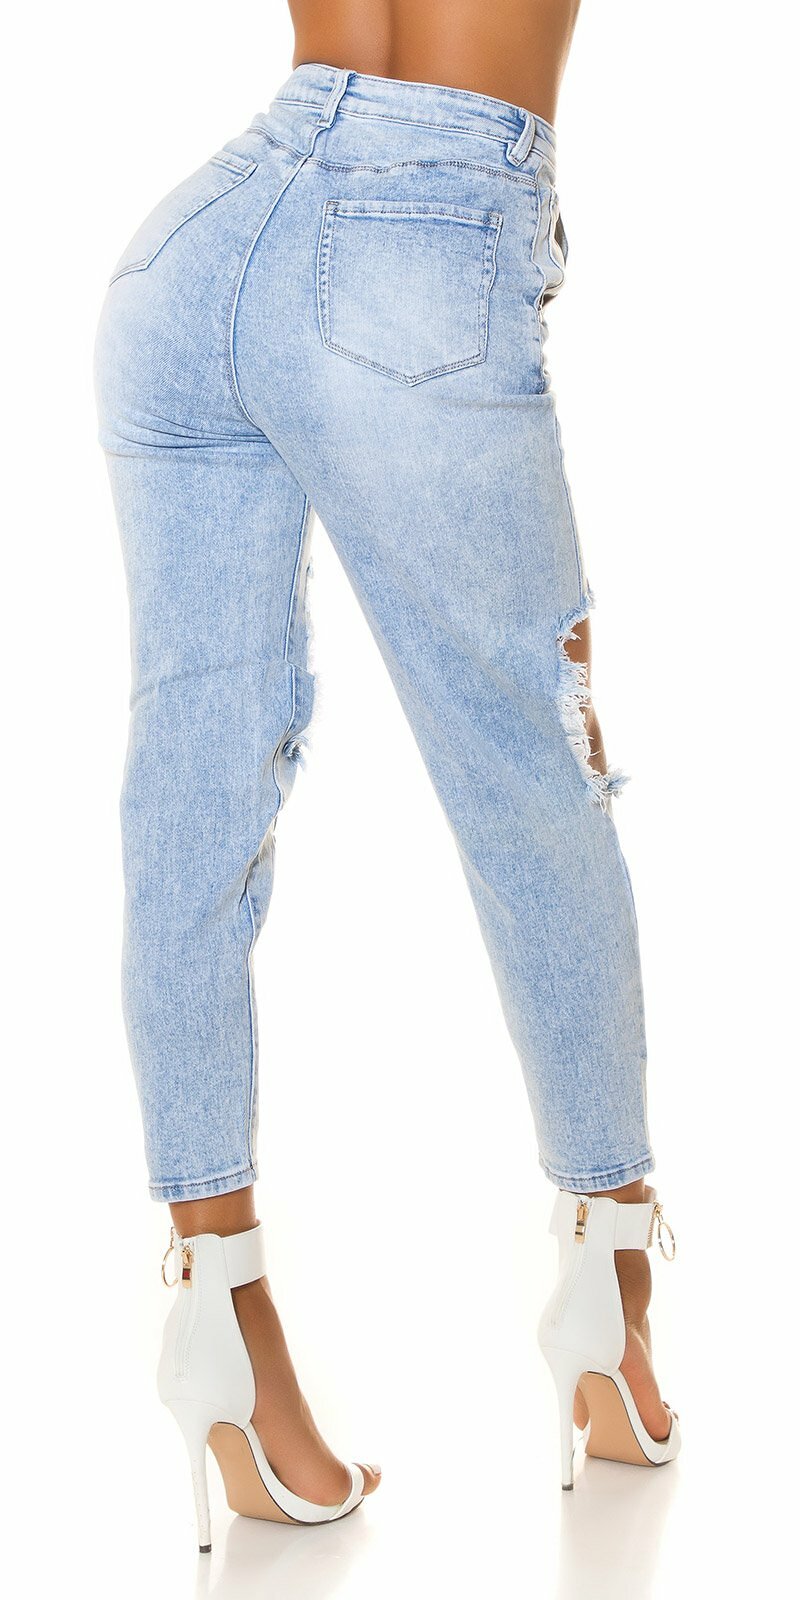 Vysoké lightwash džínsy s otvormi na stehnách Modrá